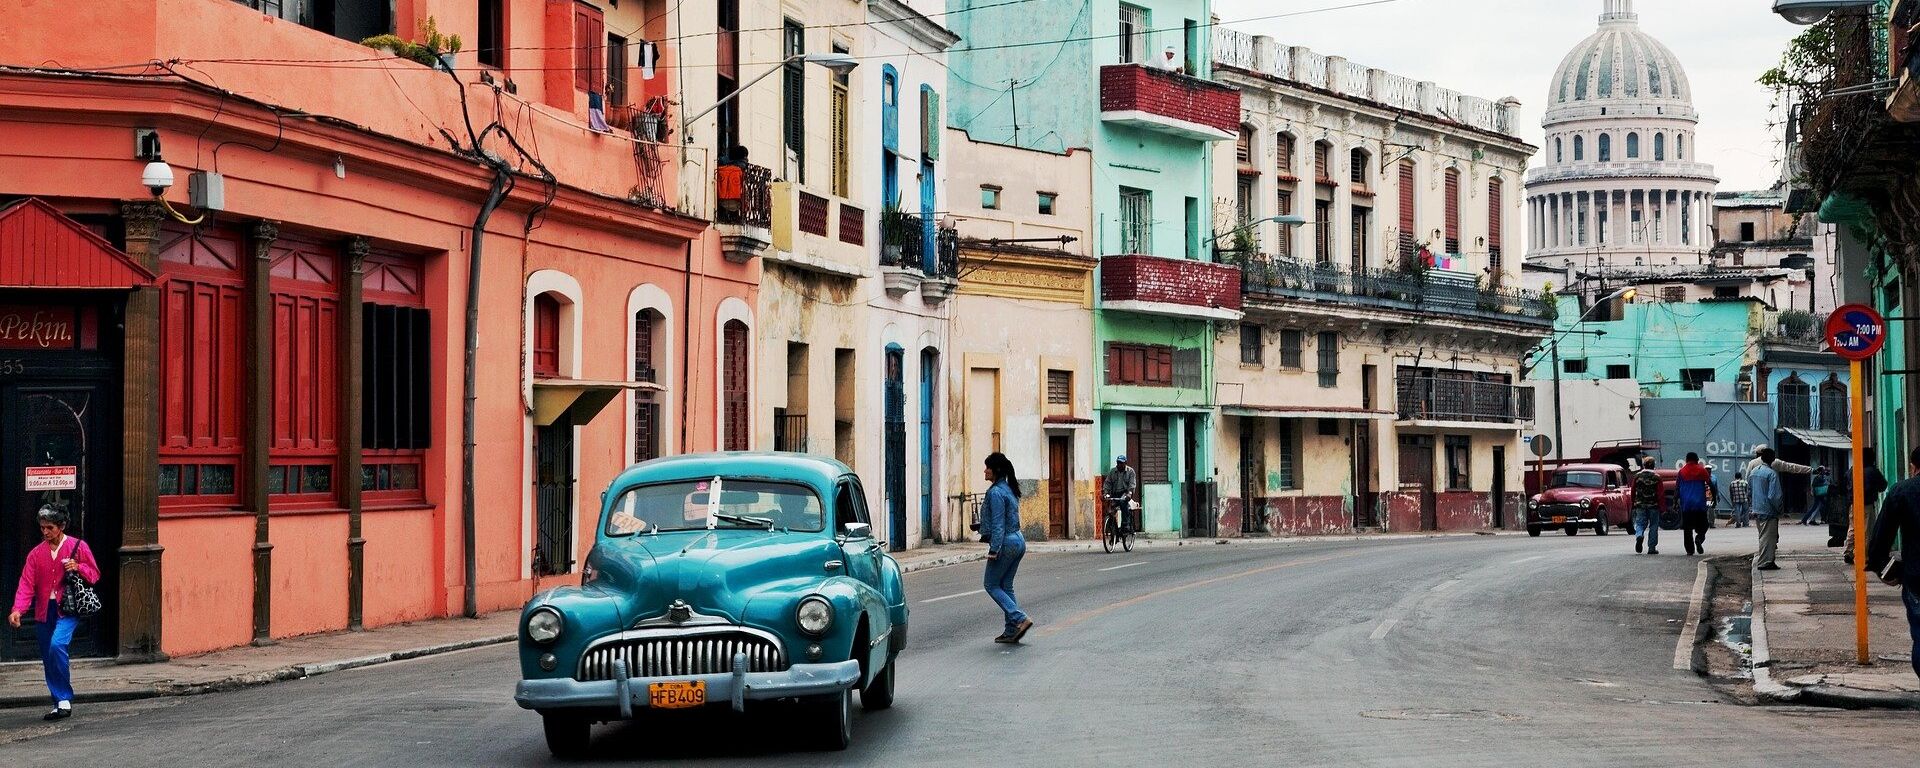 La Habana, capital de Cuba - Sputnik Mundo, 1920, 13.05.2021